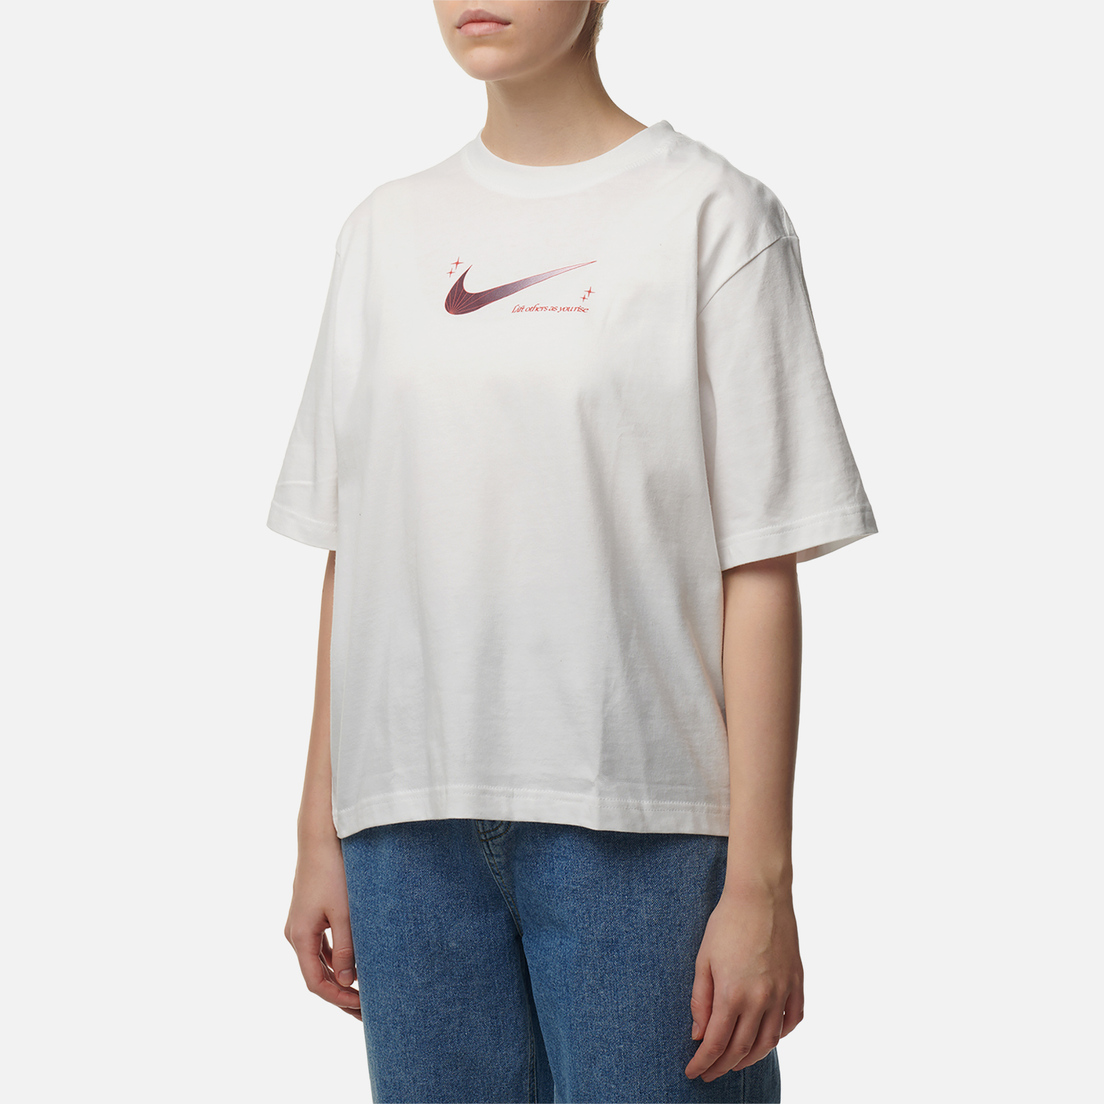 Nike Женская футболка Graphic Printed 3 Boxy